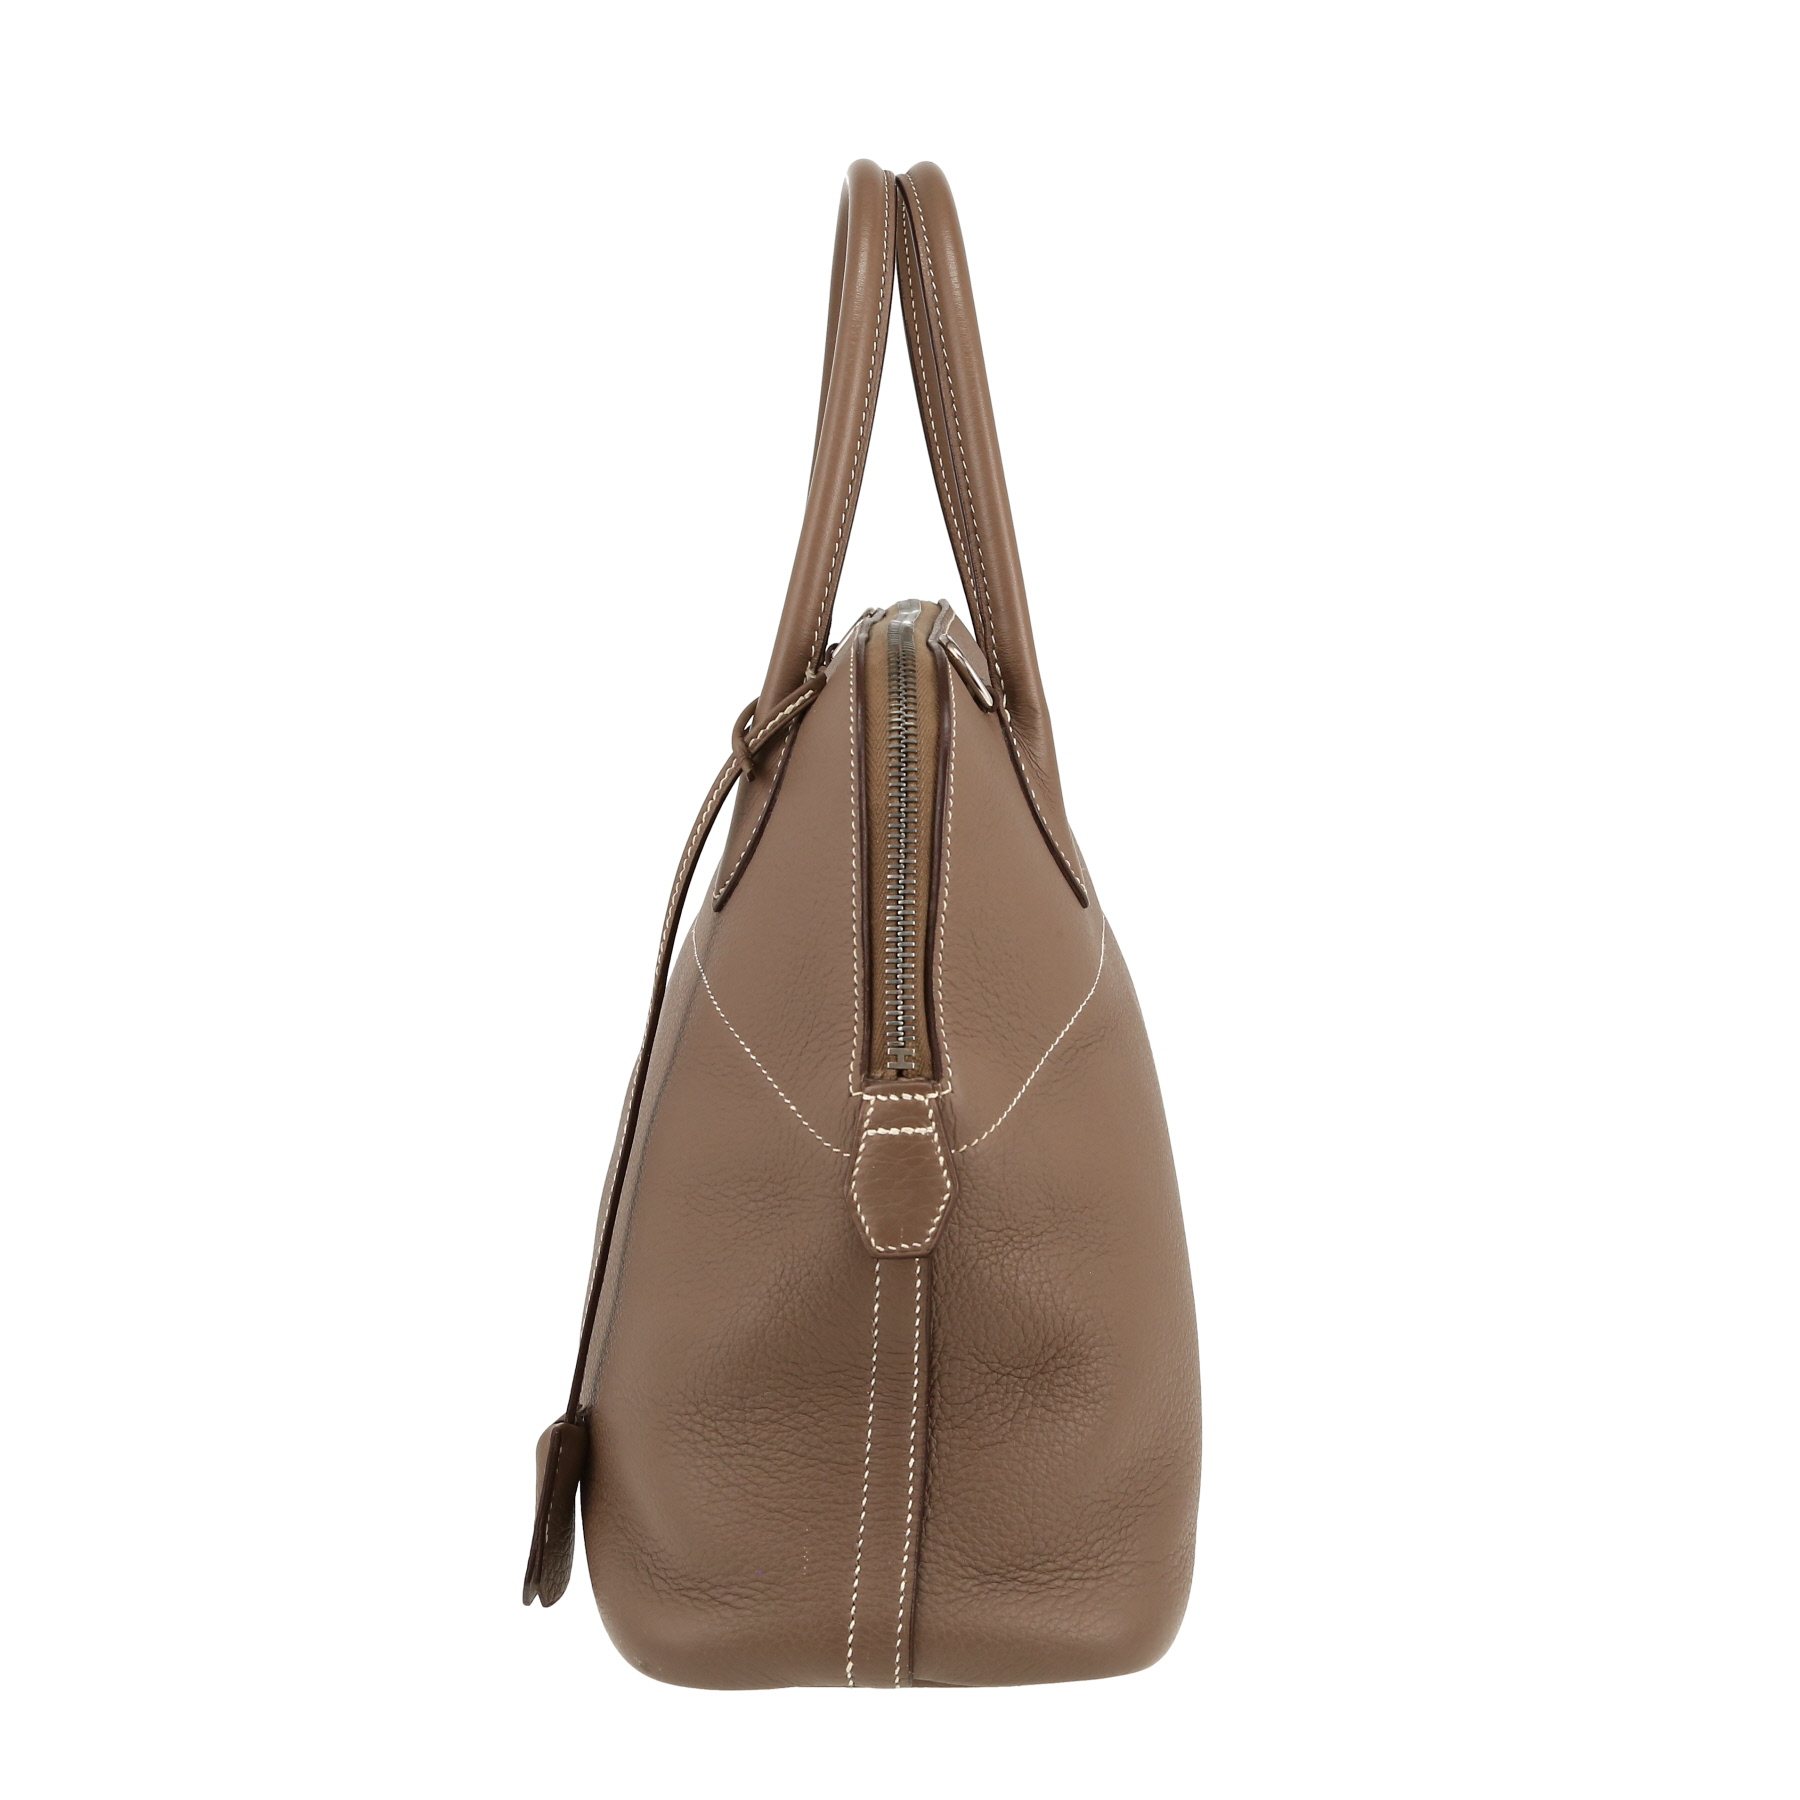 Bolide 31 cm Handbag In Etoupe Leather